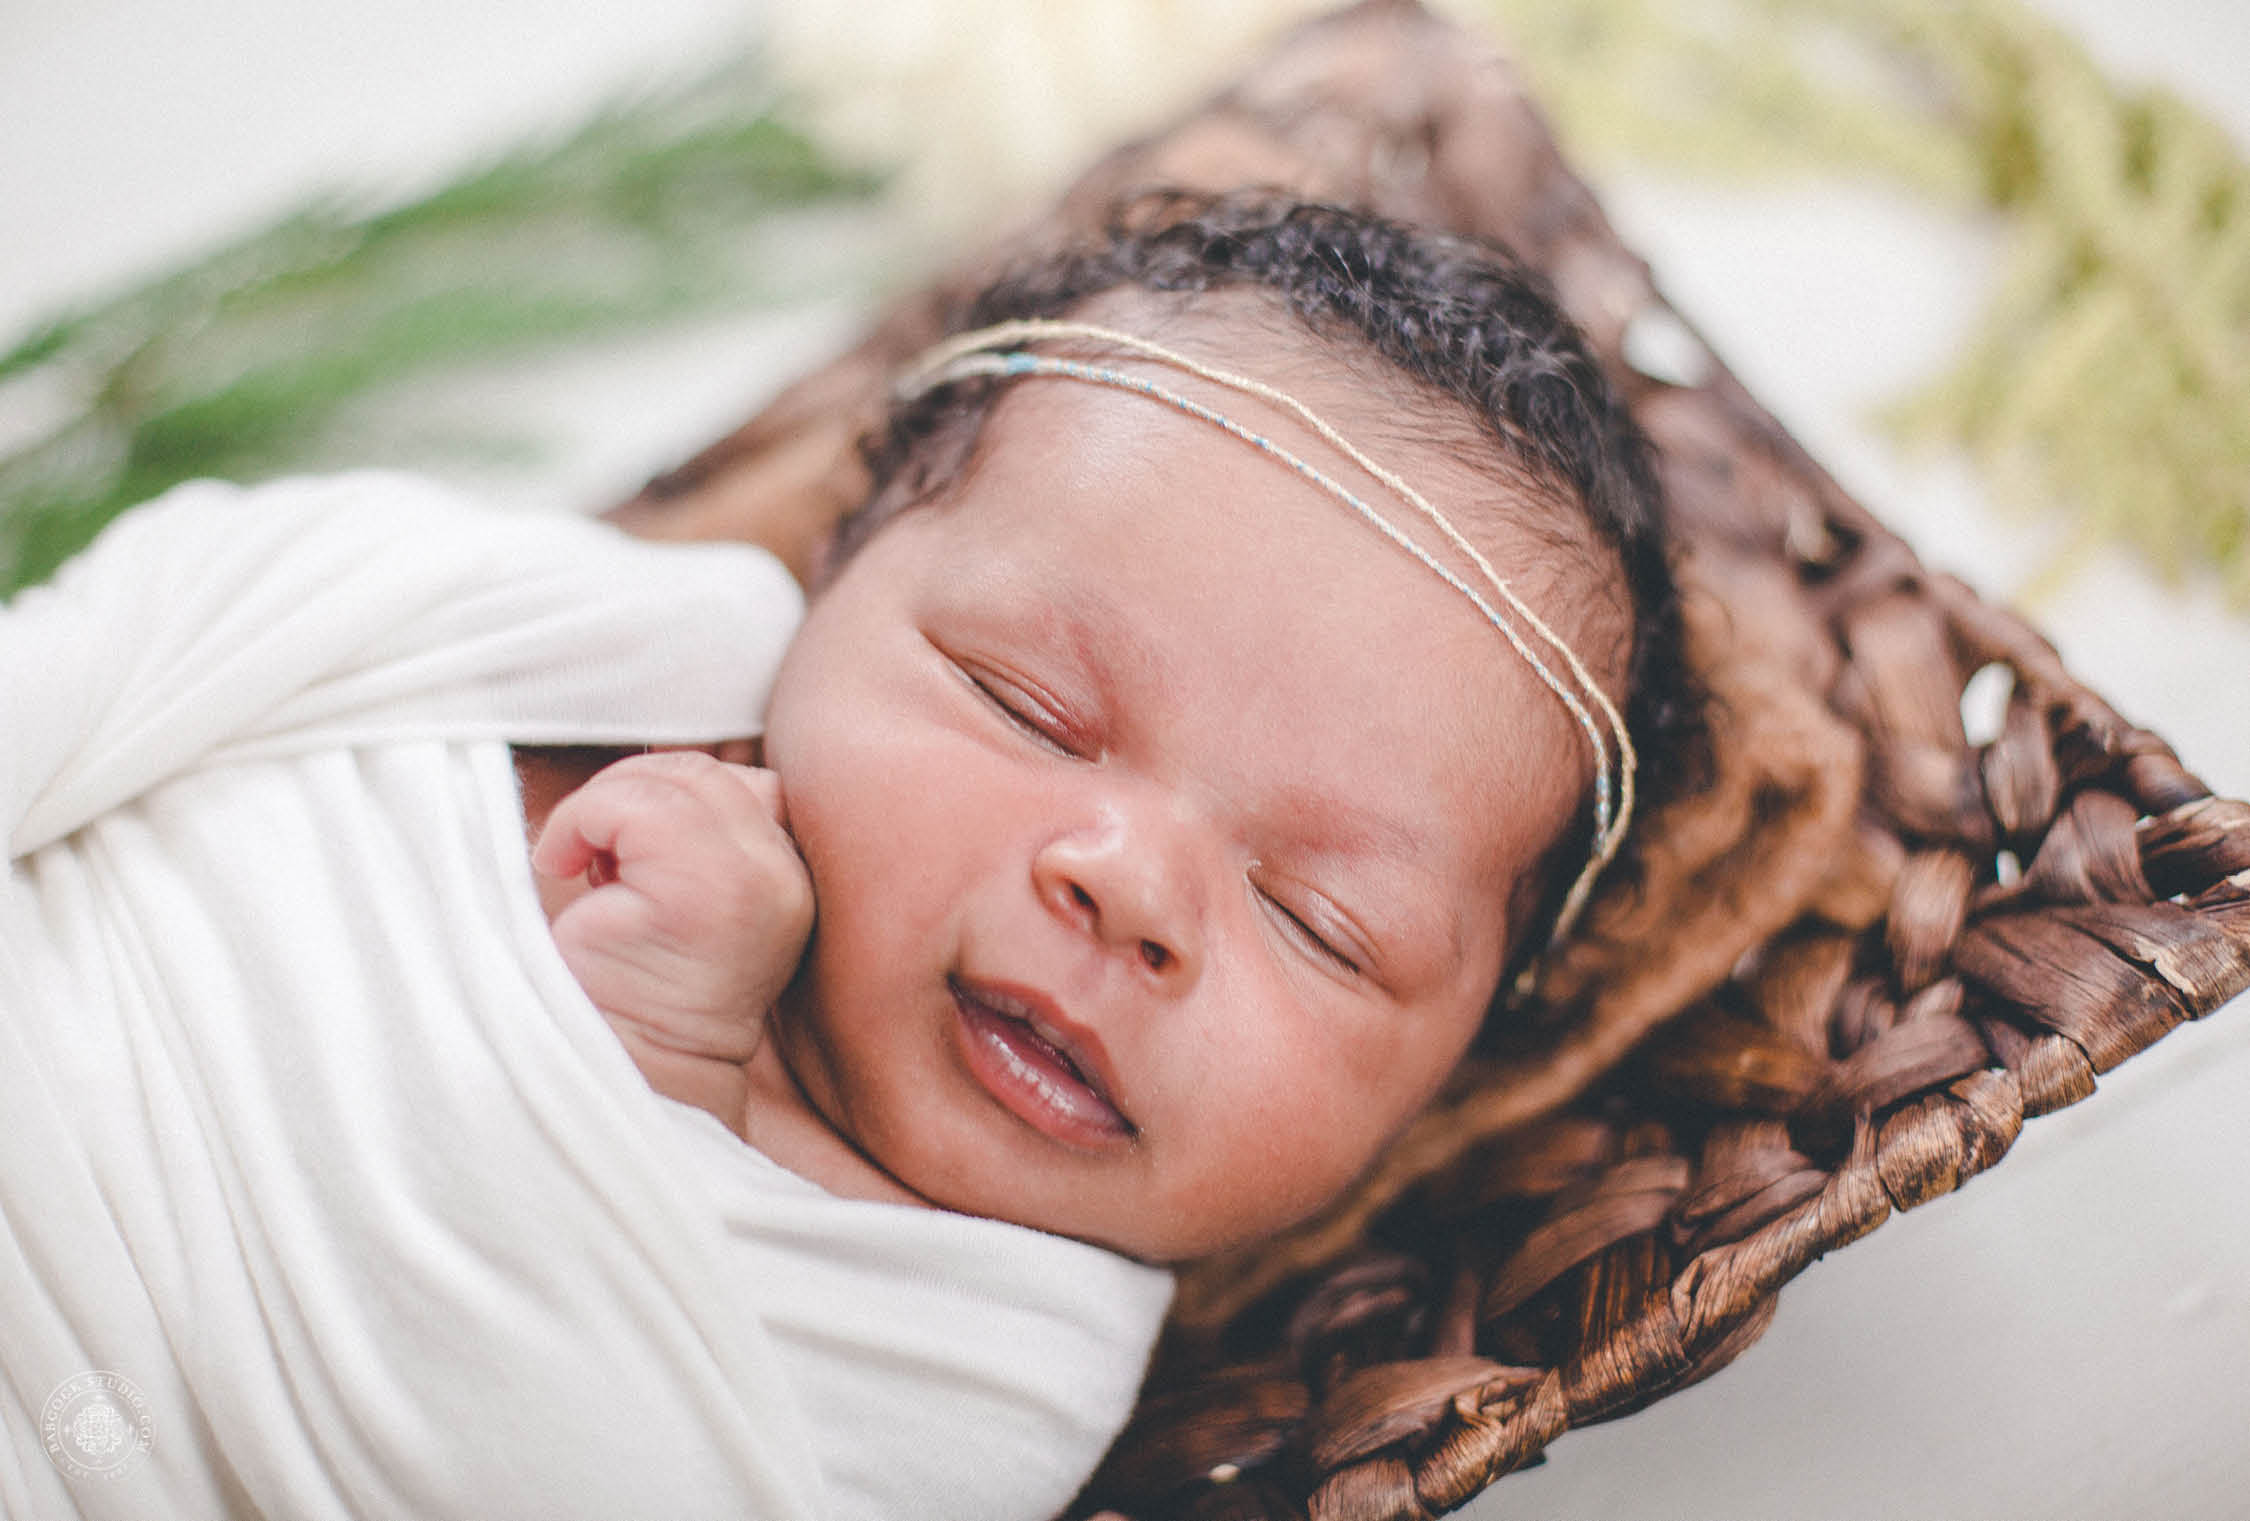 dia-newborn-adoption-photographer-dayton-ohio-3.jpg